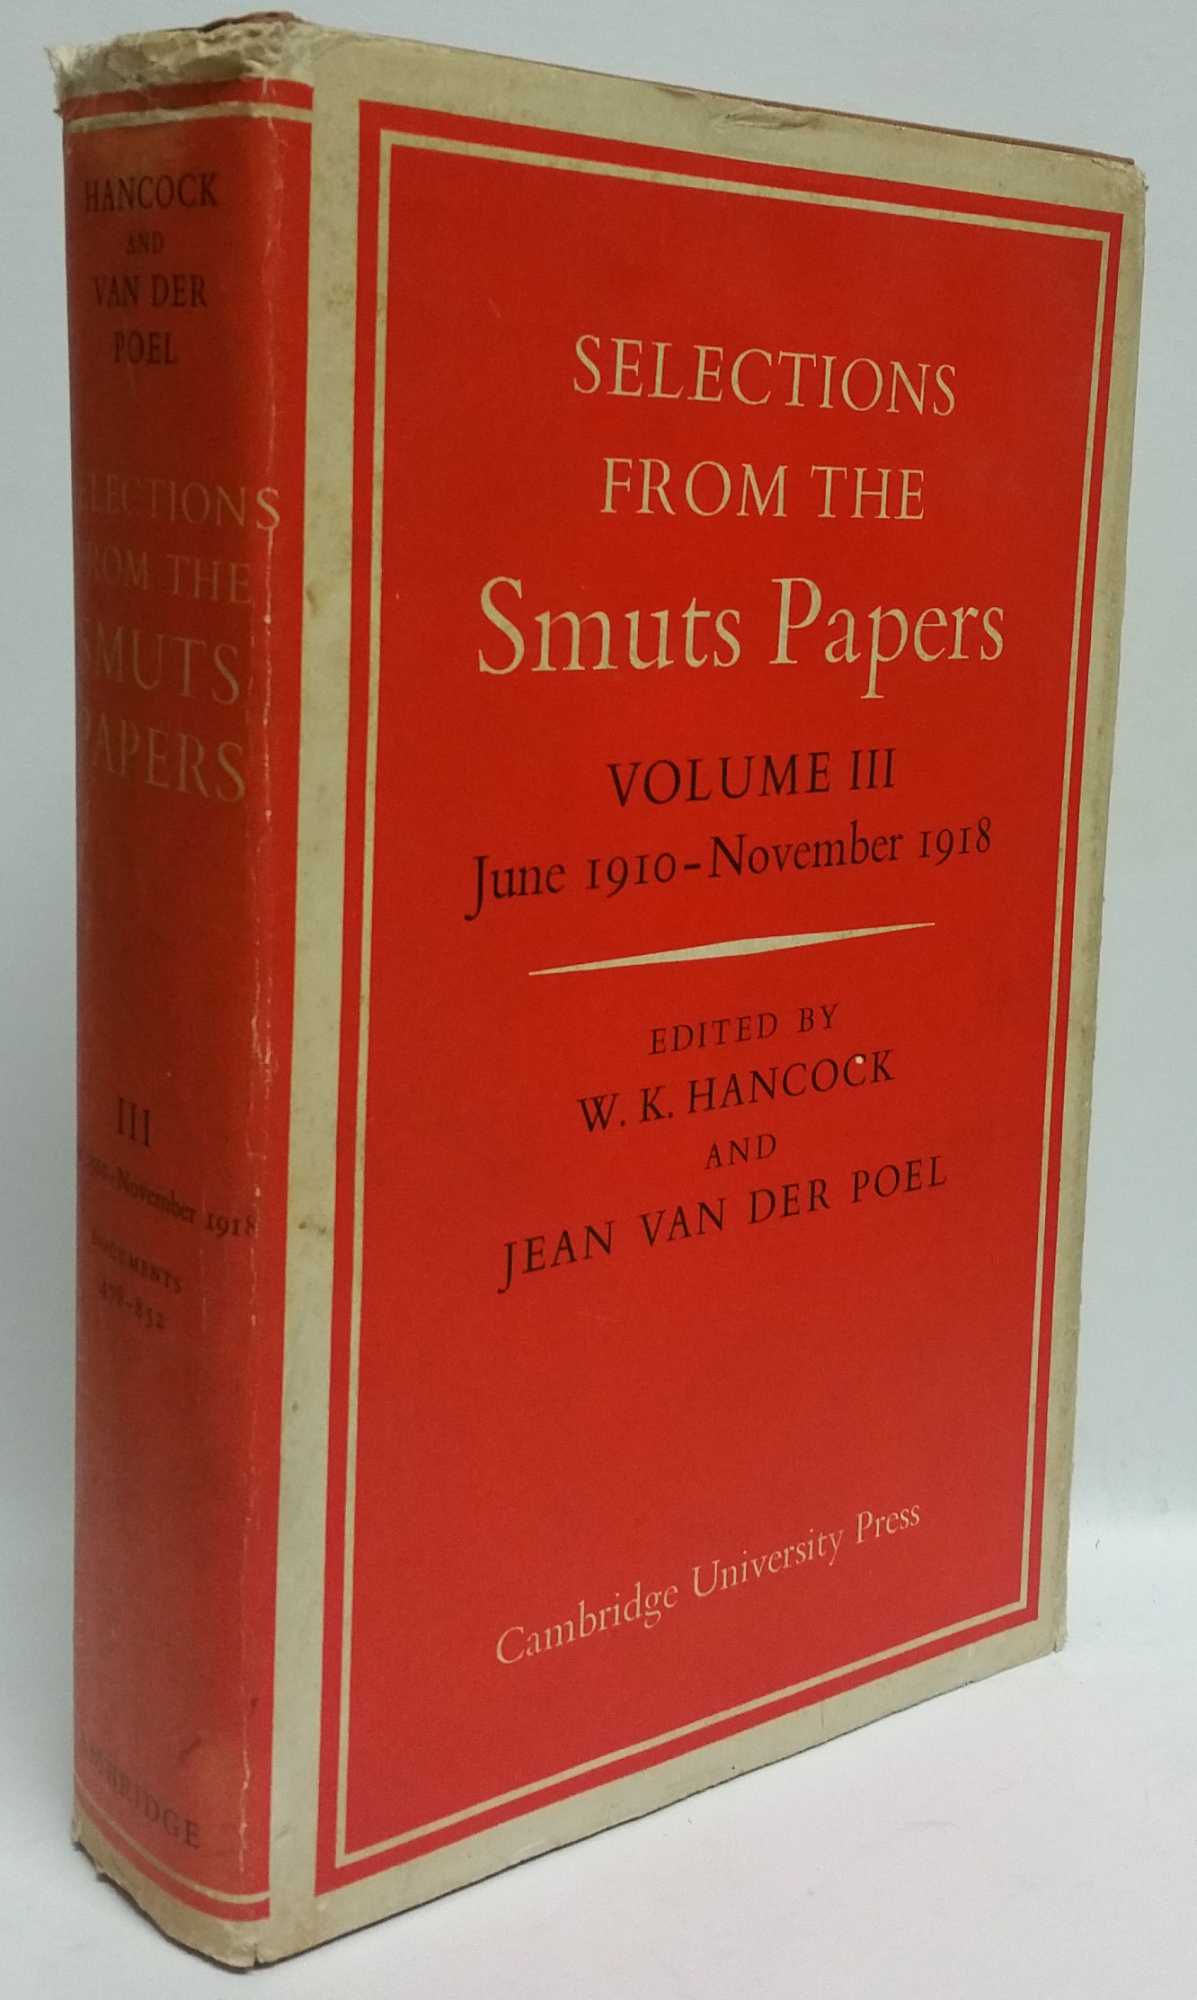 W. K. Hancock; Jean van der Poel - Selections from the Smuts Papers Volume III, June 1910-November 1918